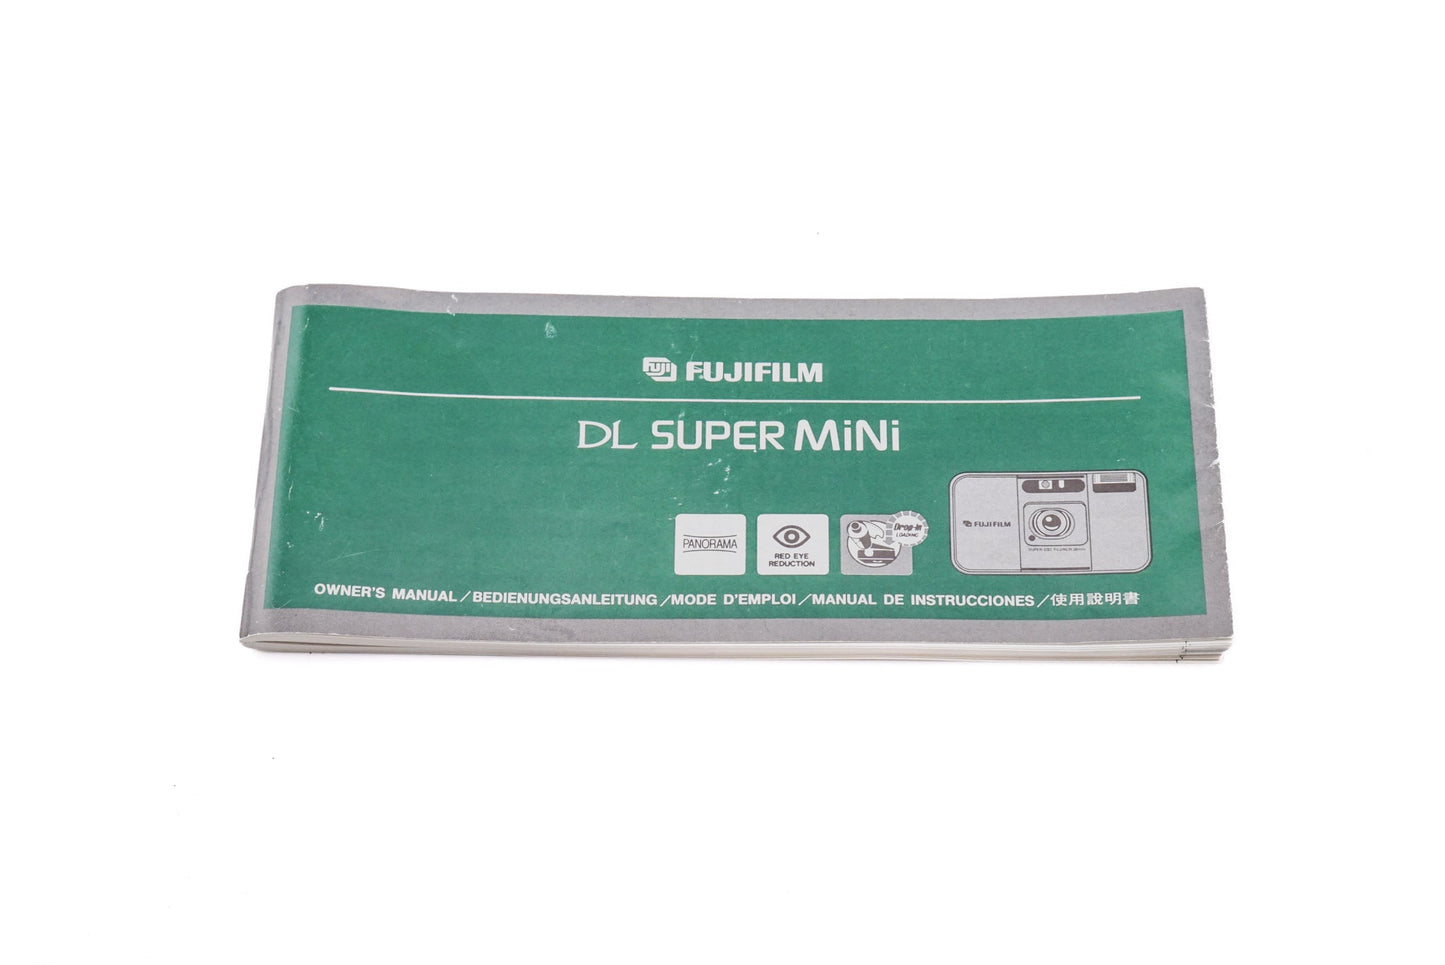 Fujifilm DL Super Mini Owner's Manual